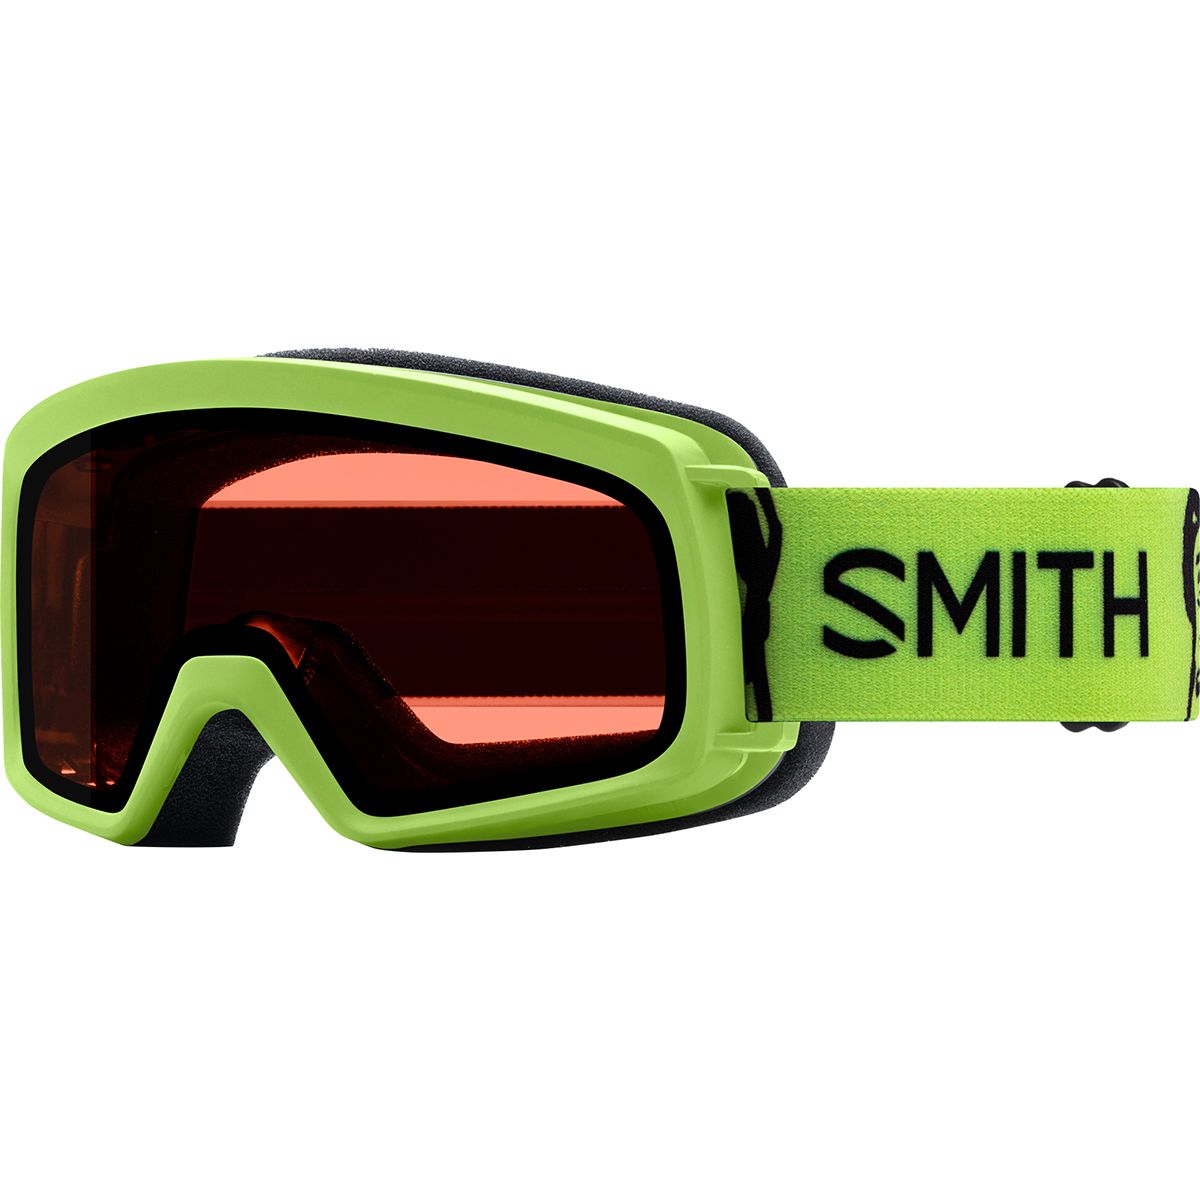 Smith Rascal Goggles - Kids' Flash Faces/Rc36/No Extra Lens